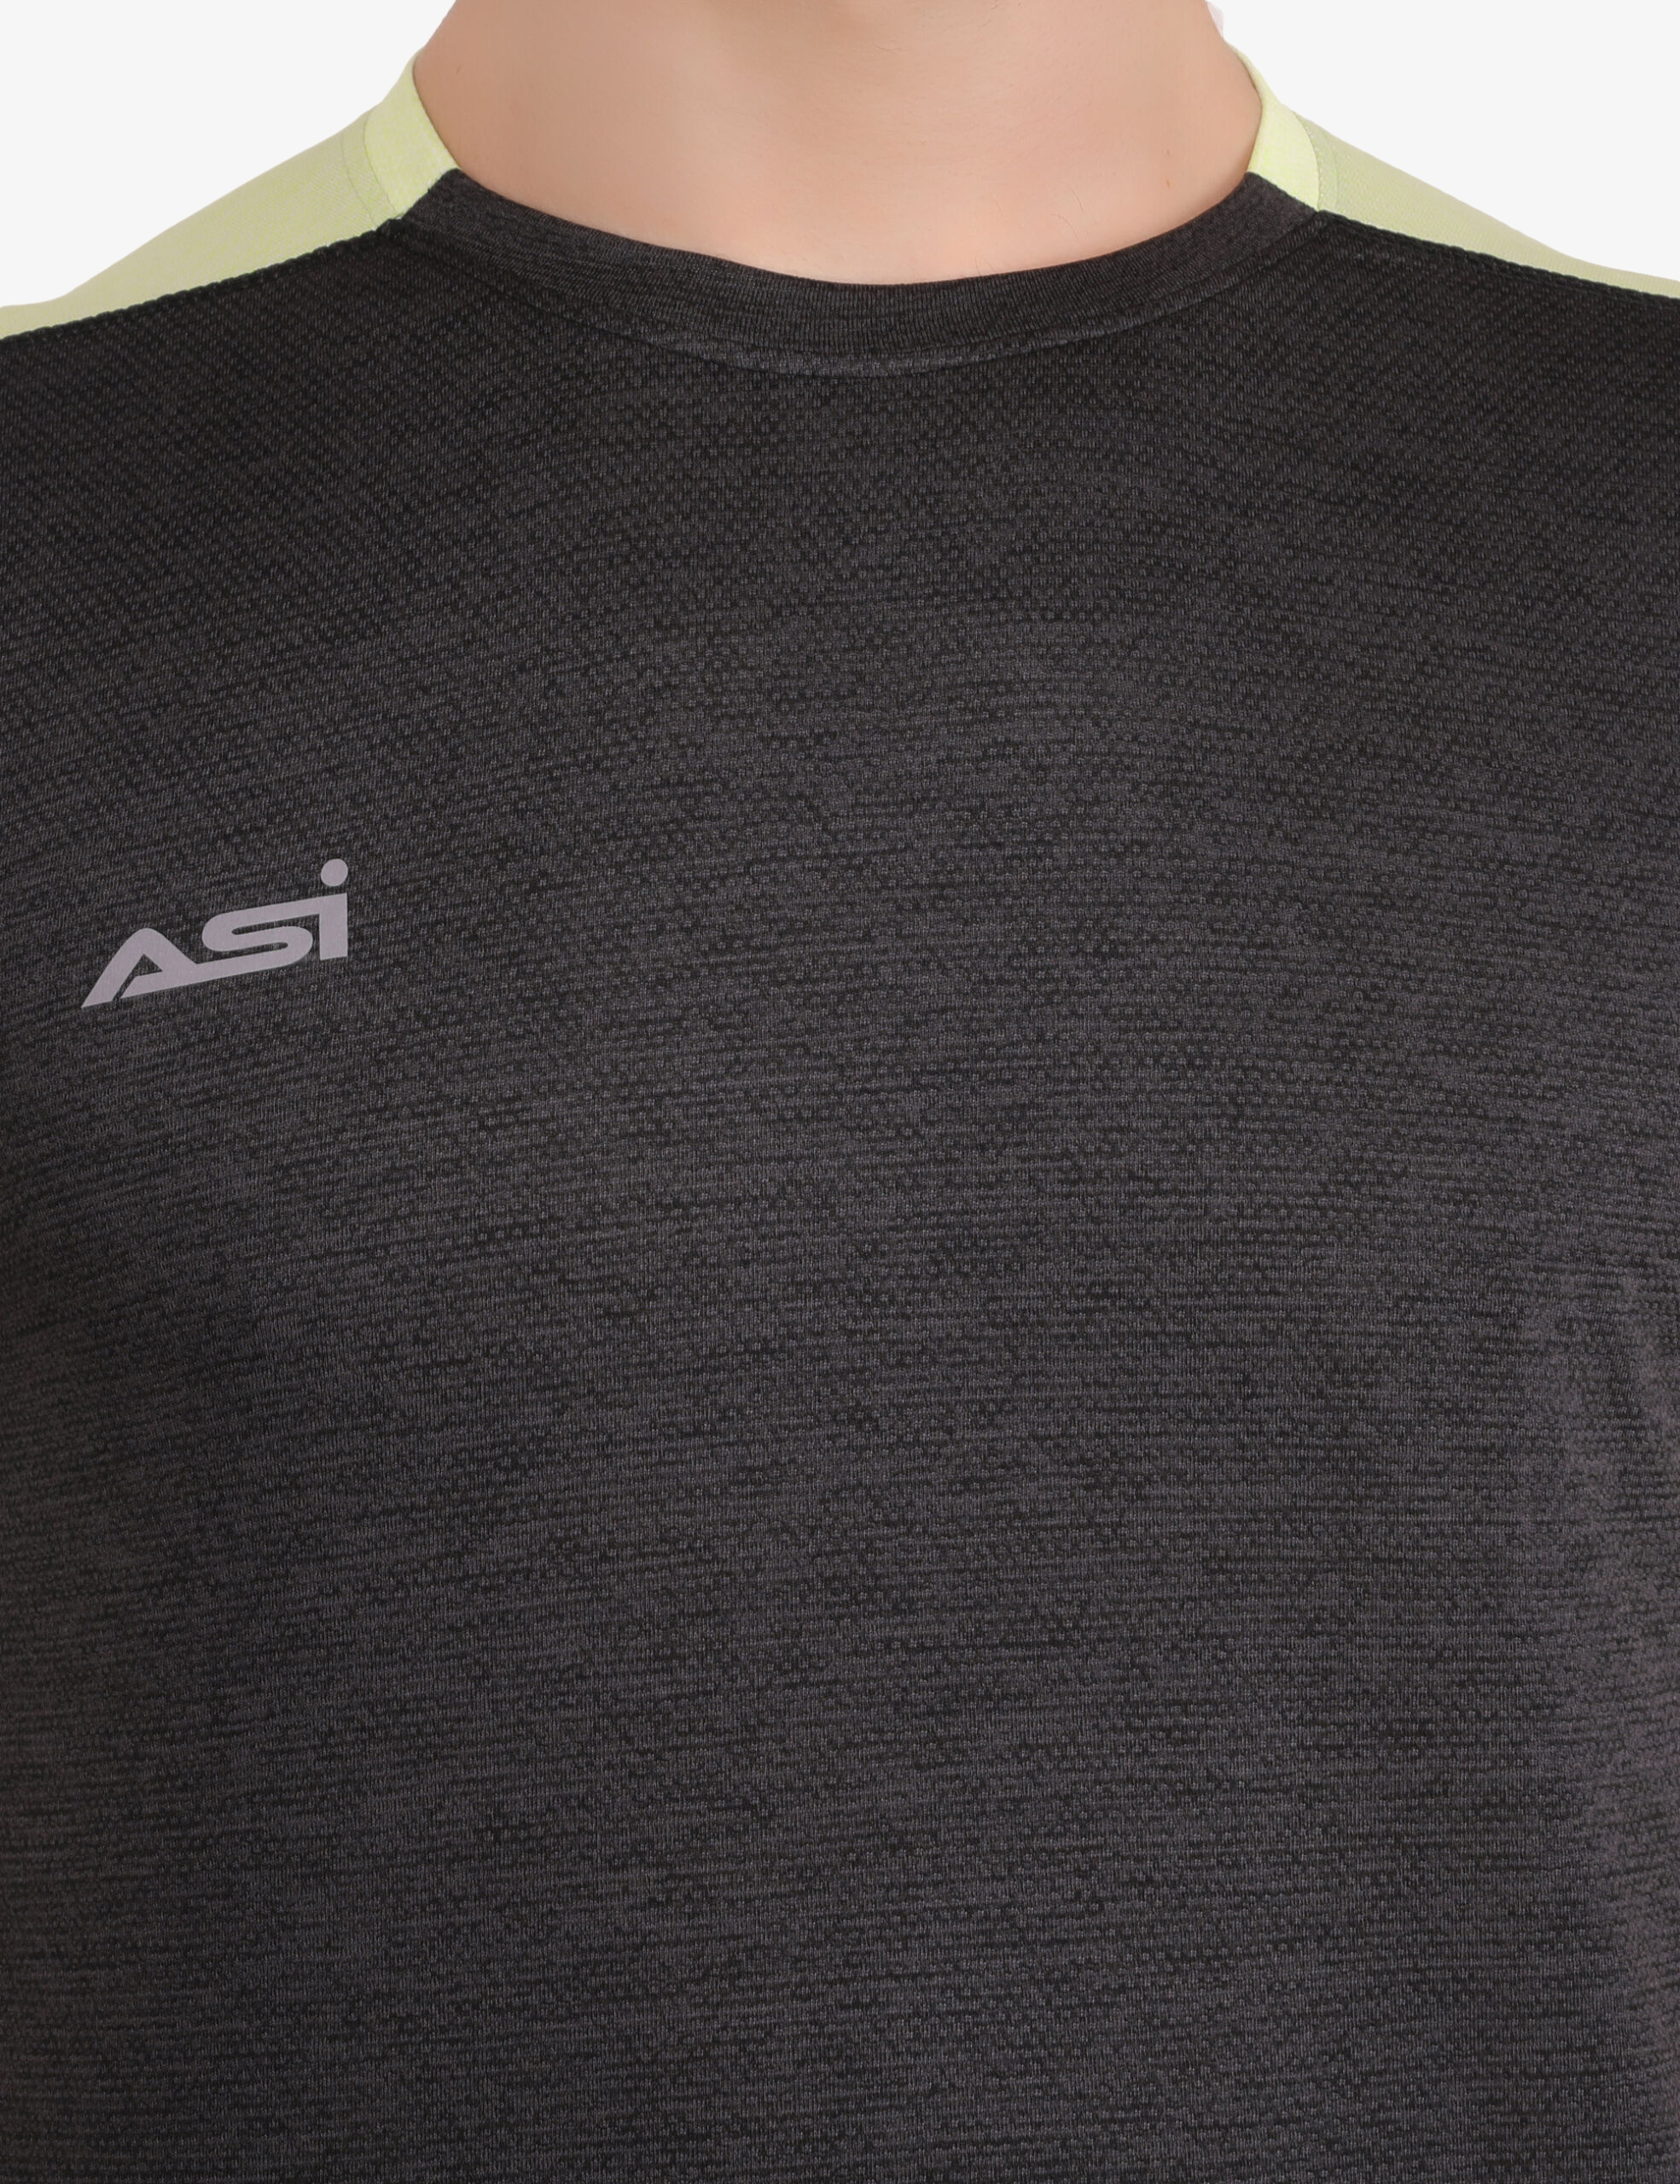 ASI Swift Sports T-Shirt for Men Black Color